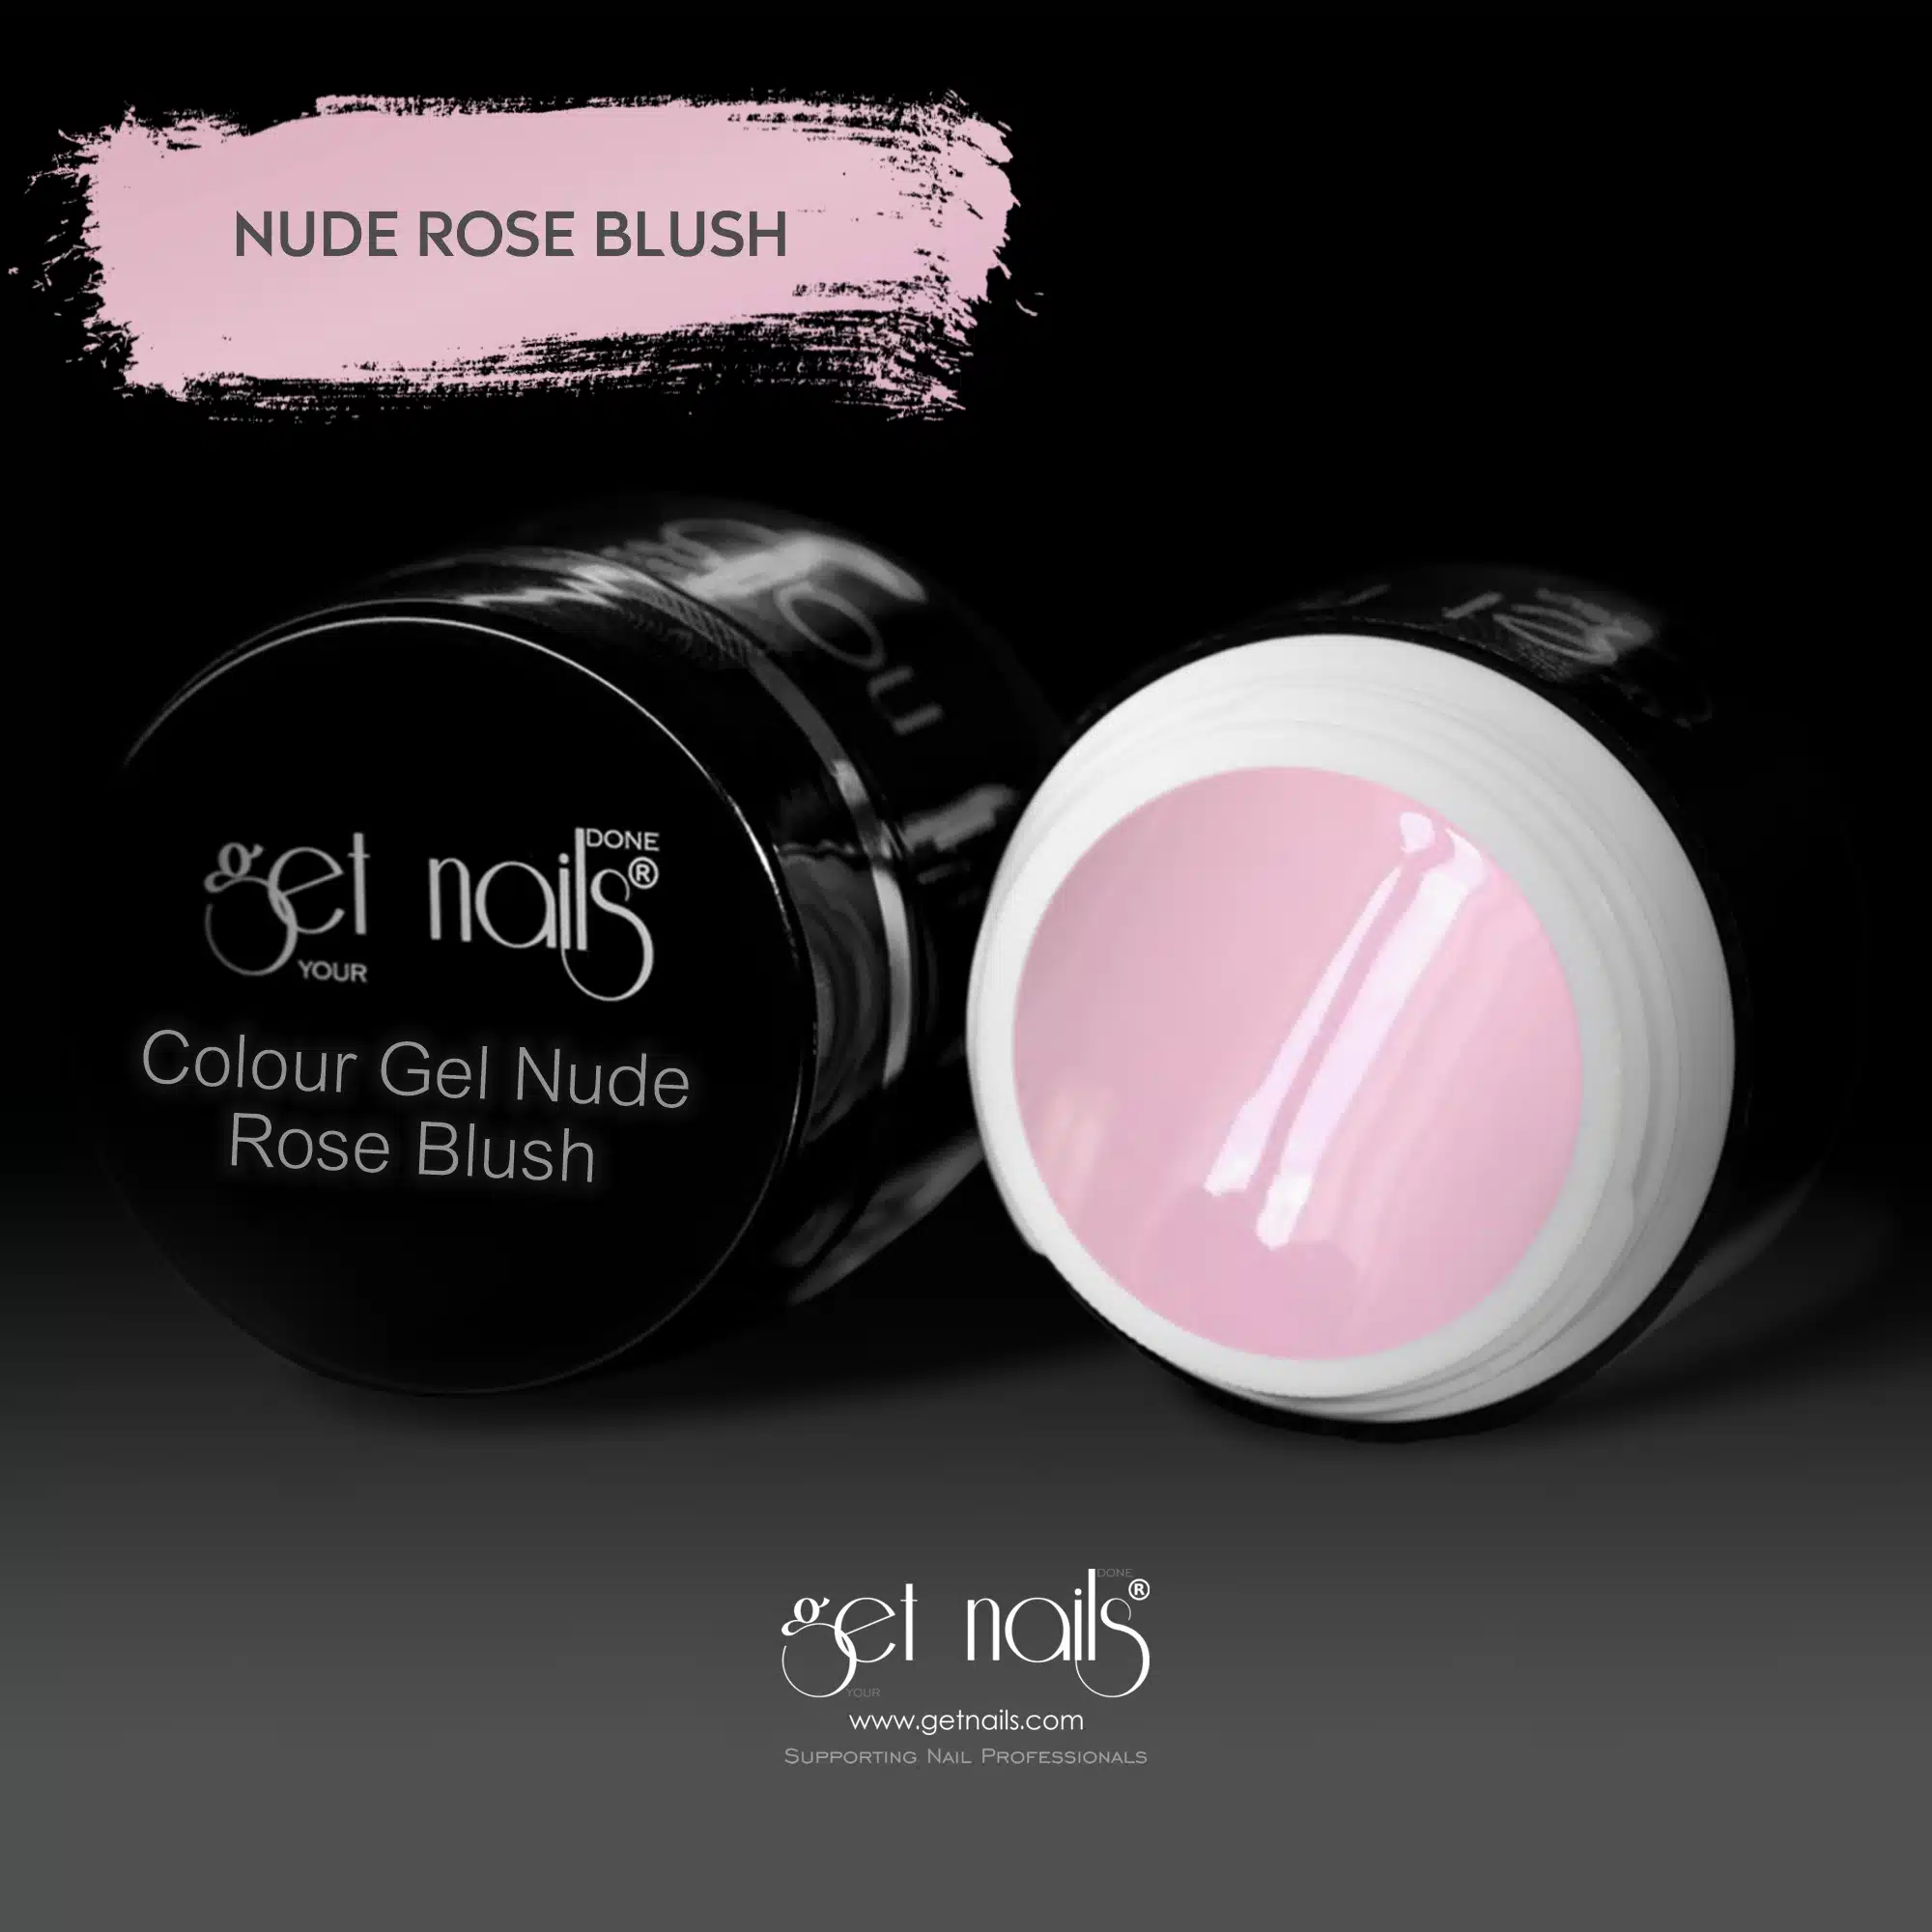 Get Nails Austria - Colour Gel Nude Rose Blush 5g